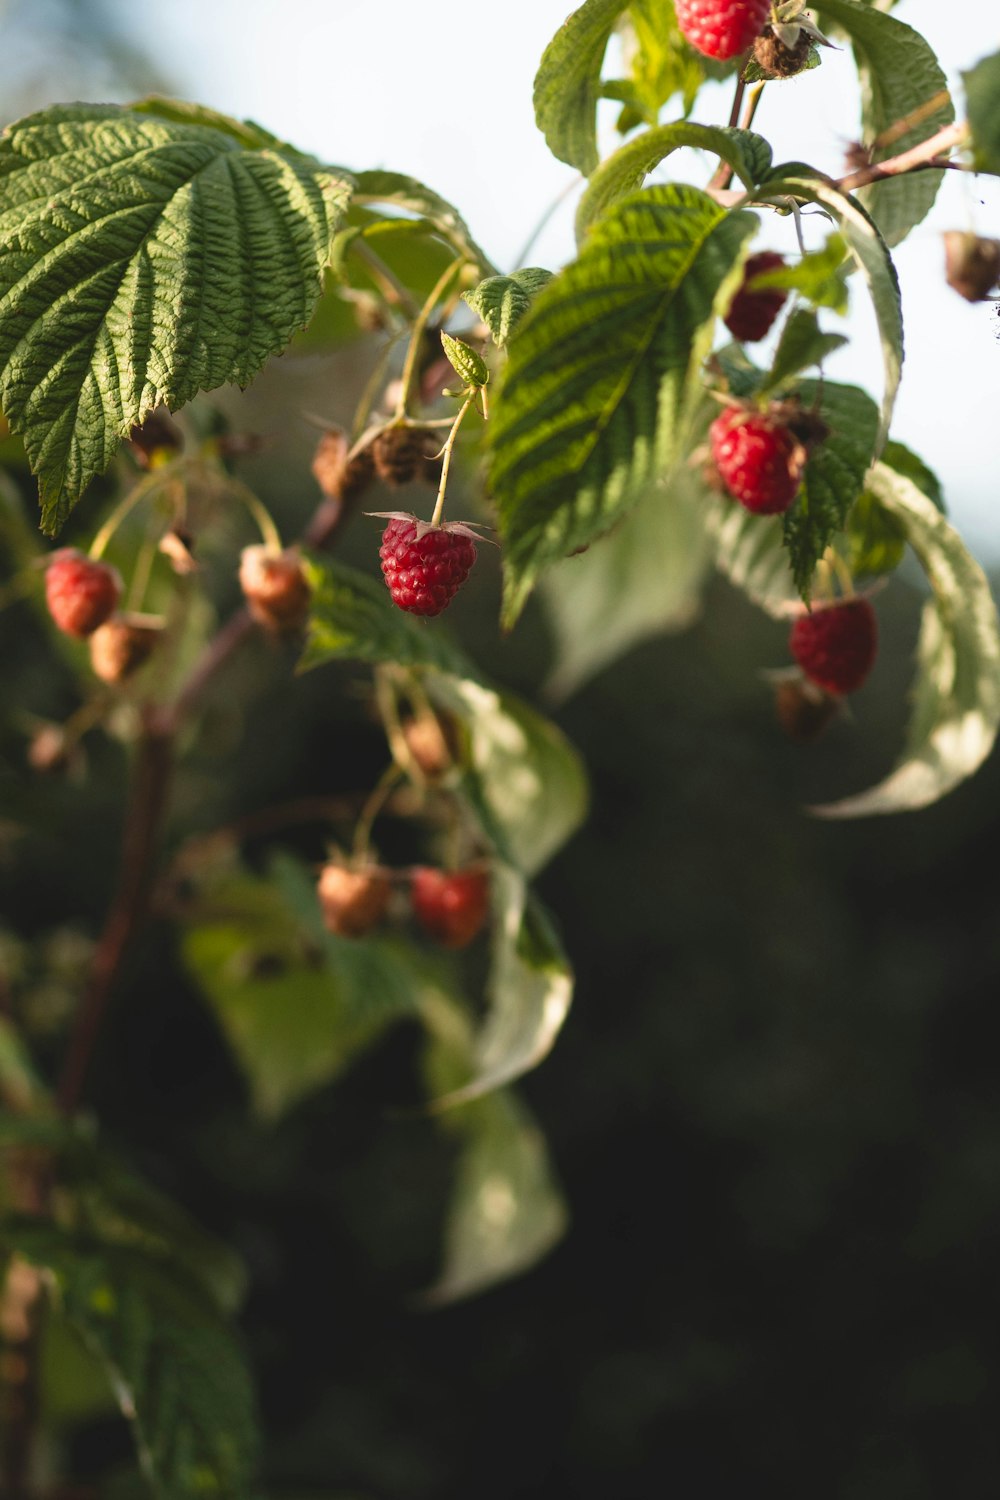 raspberries growing on a tree in the sun